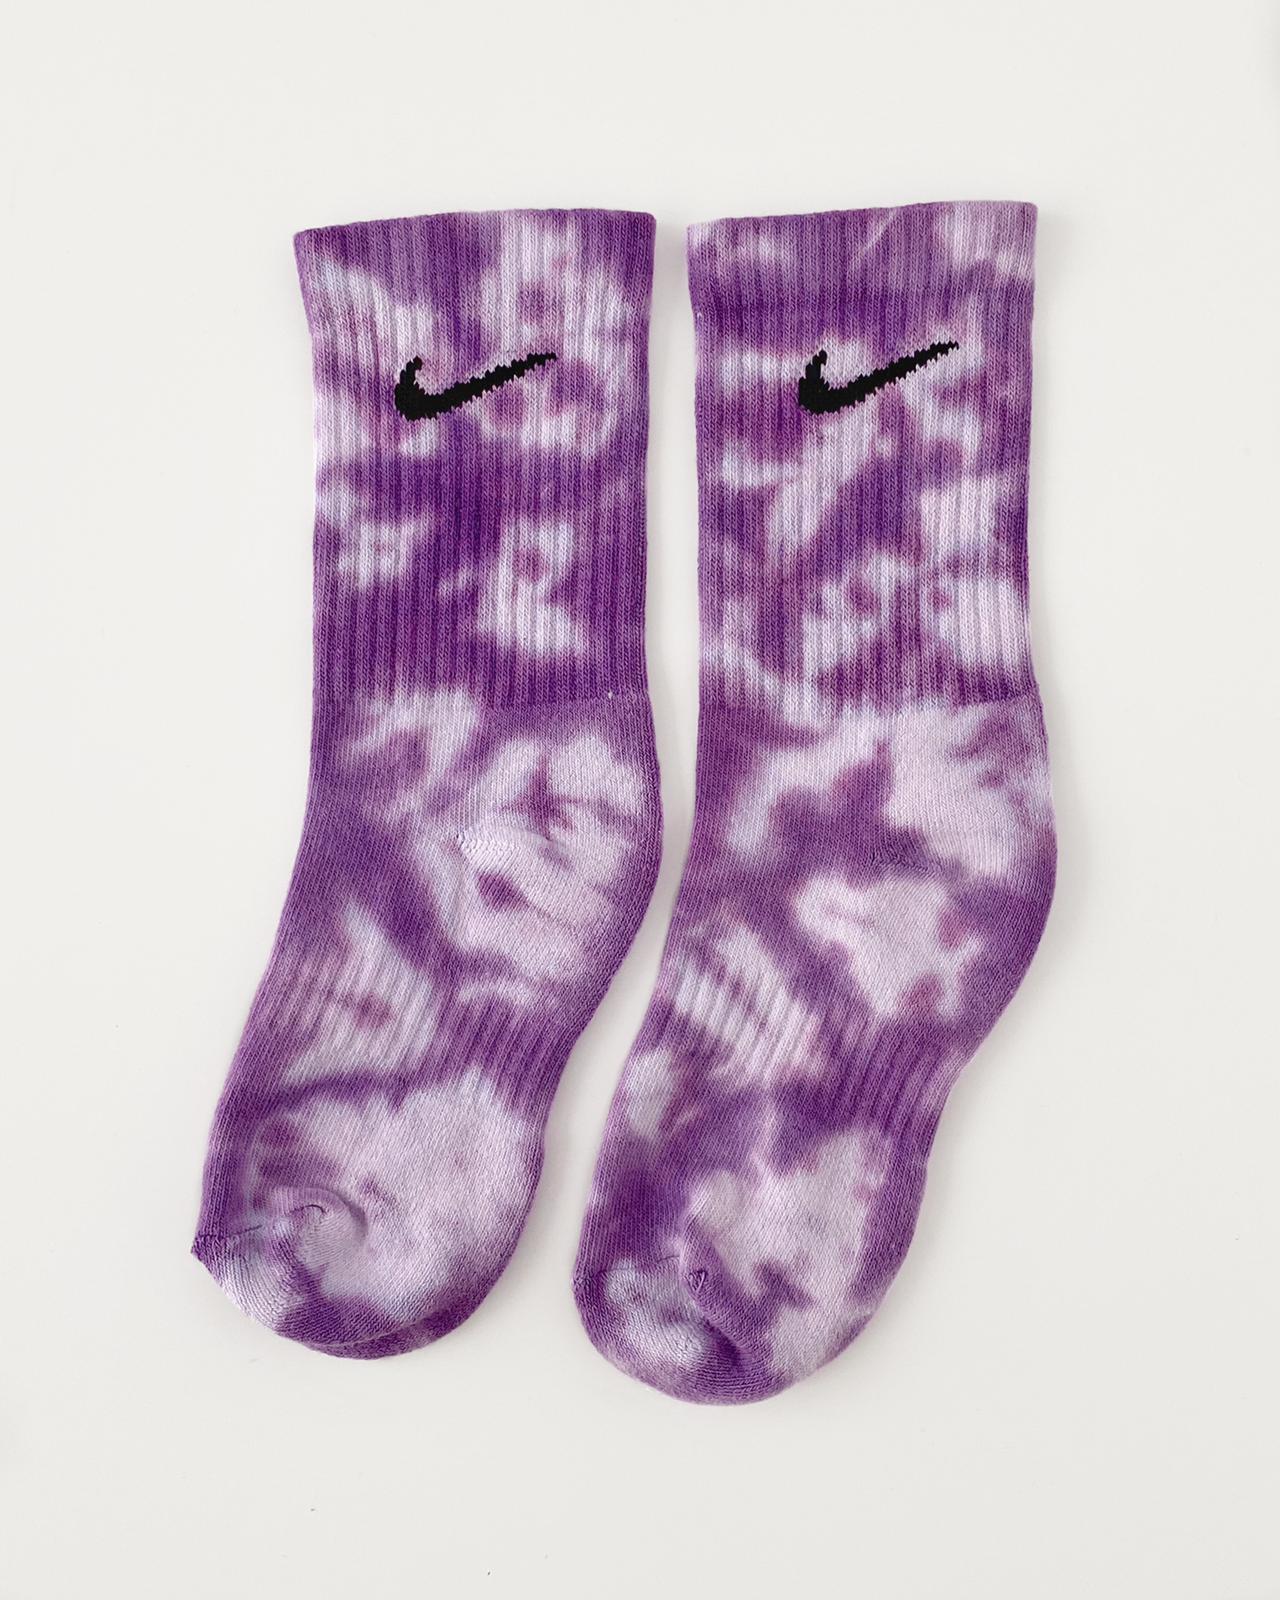 Calcetines Nike tie dye Grape cruzado retos. Calcetines Nike 100% originales teñidos a mano. Shop NOW! - Colour Trip